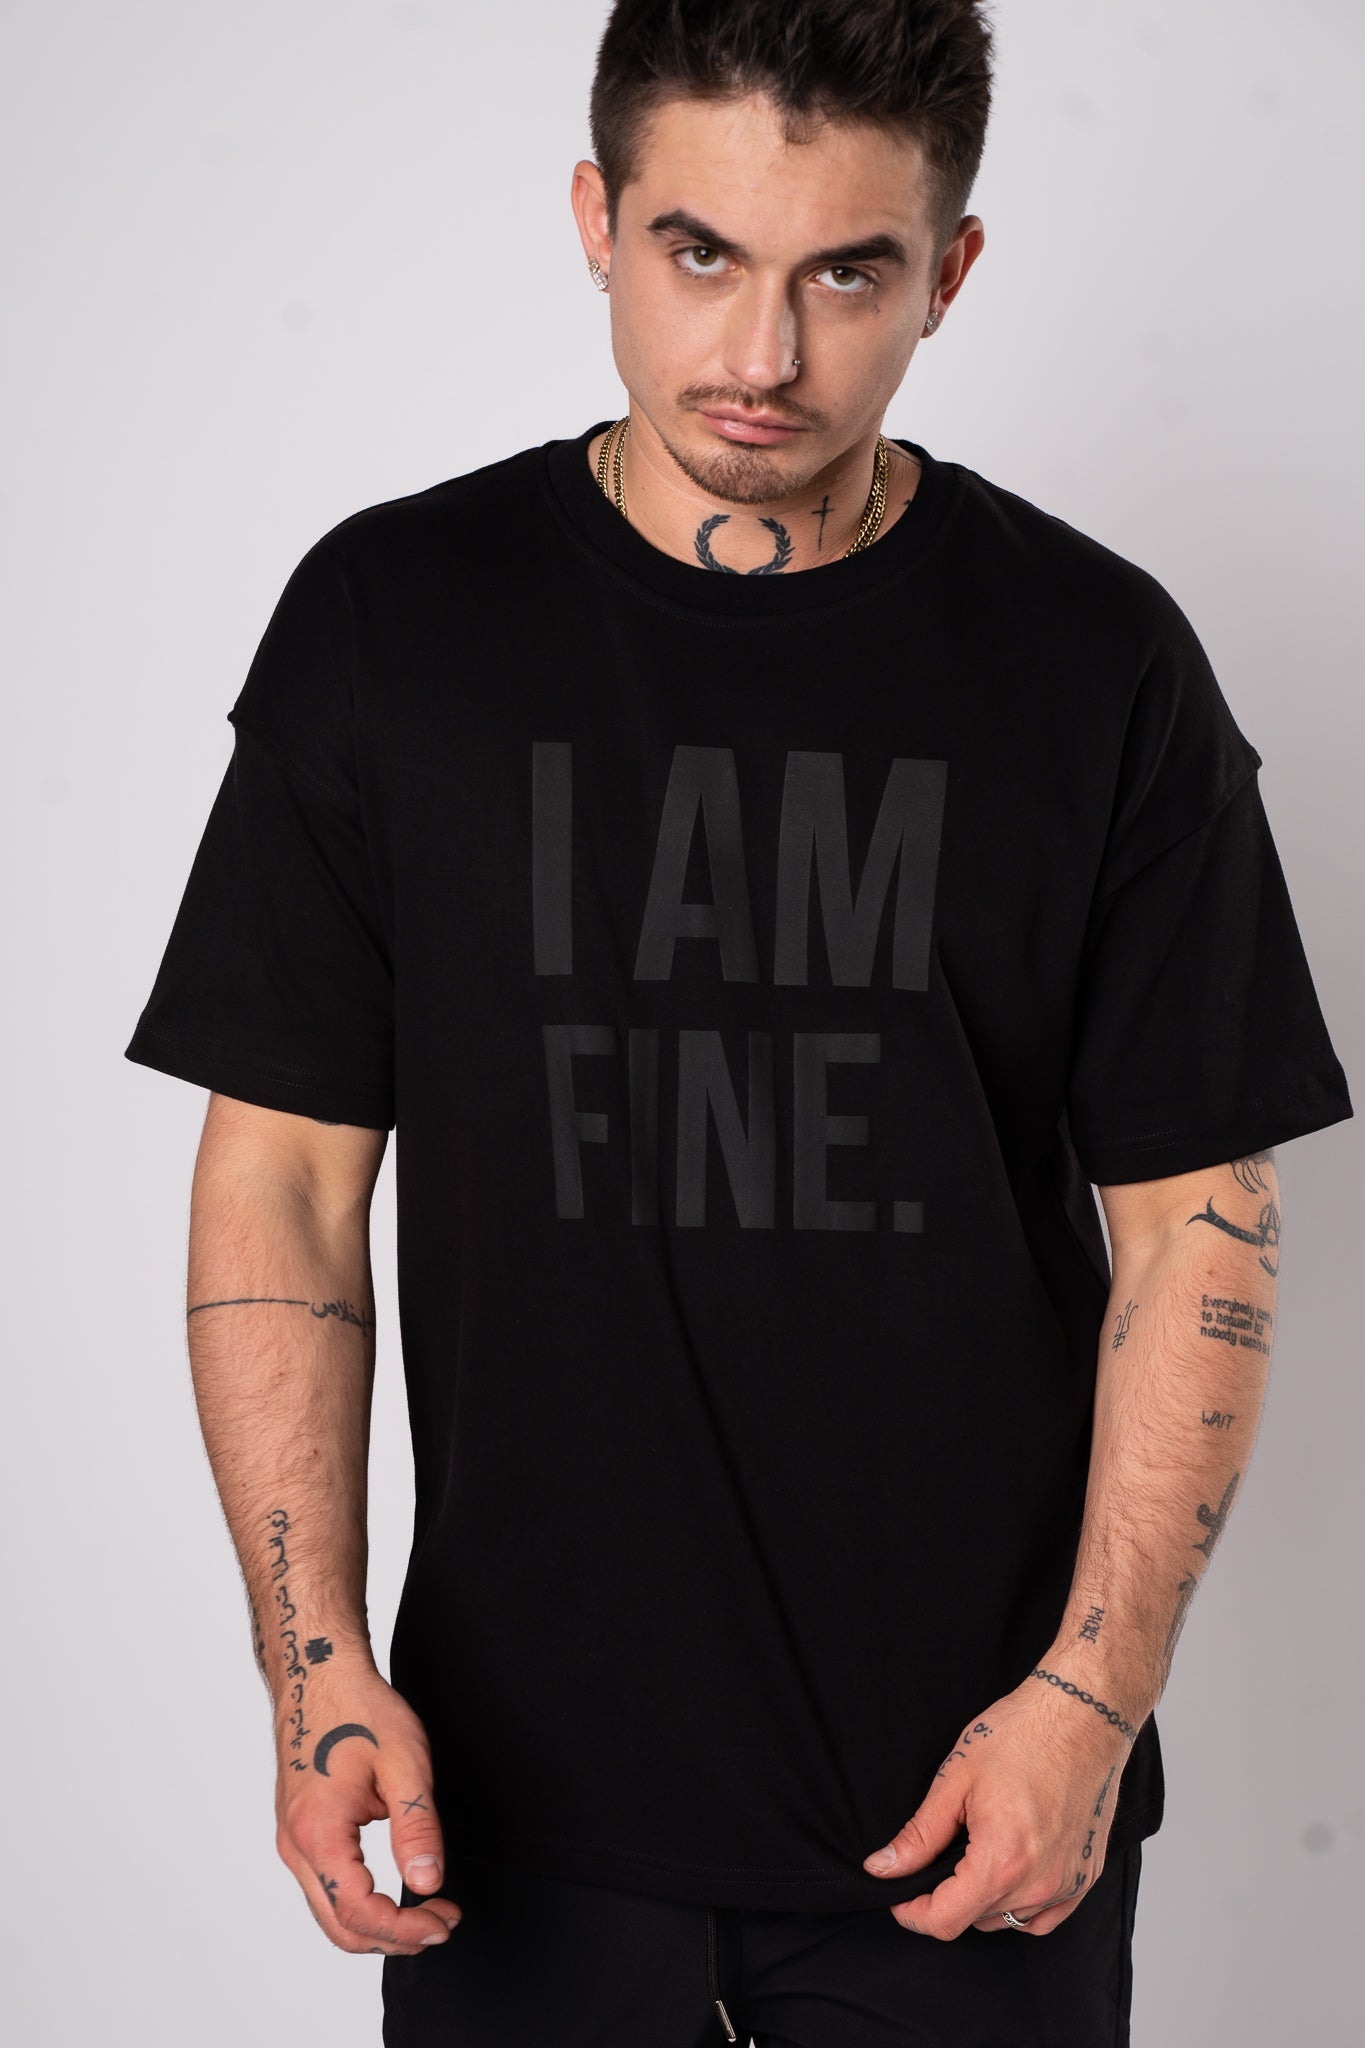 Koszulka Oversize "I am Fine" - Czarny